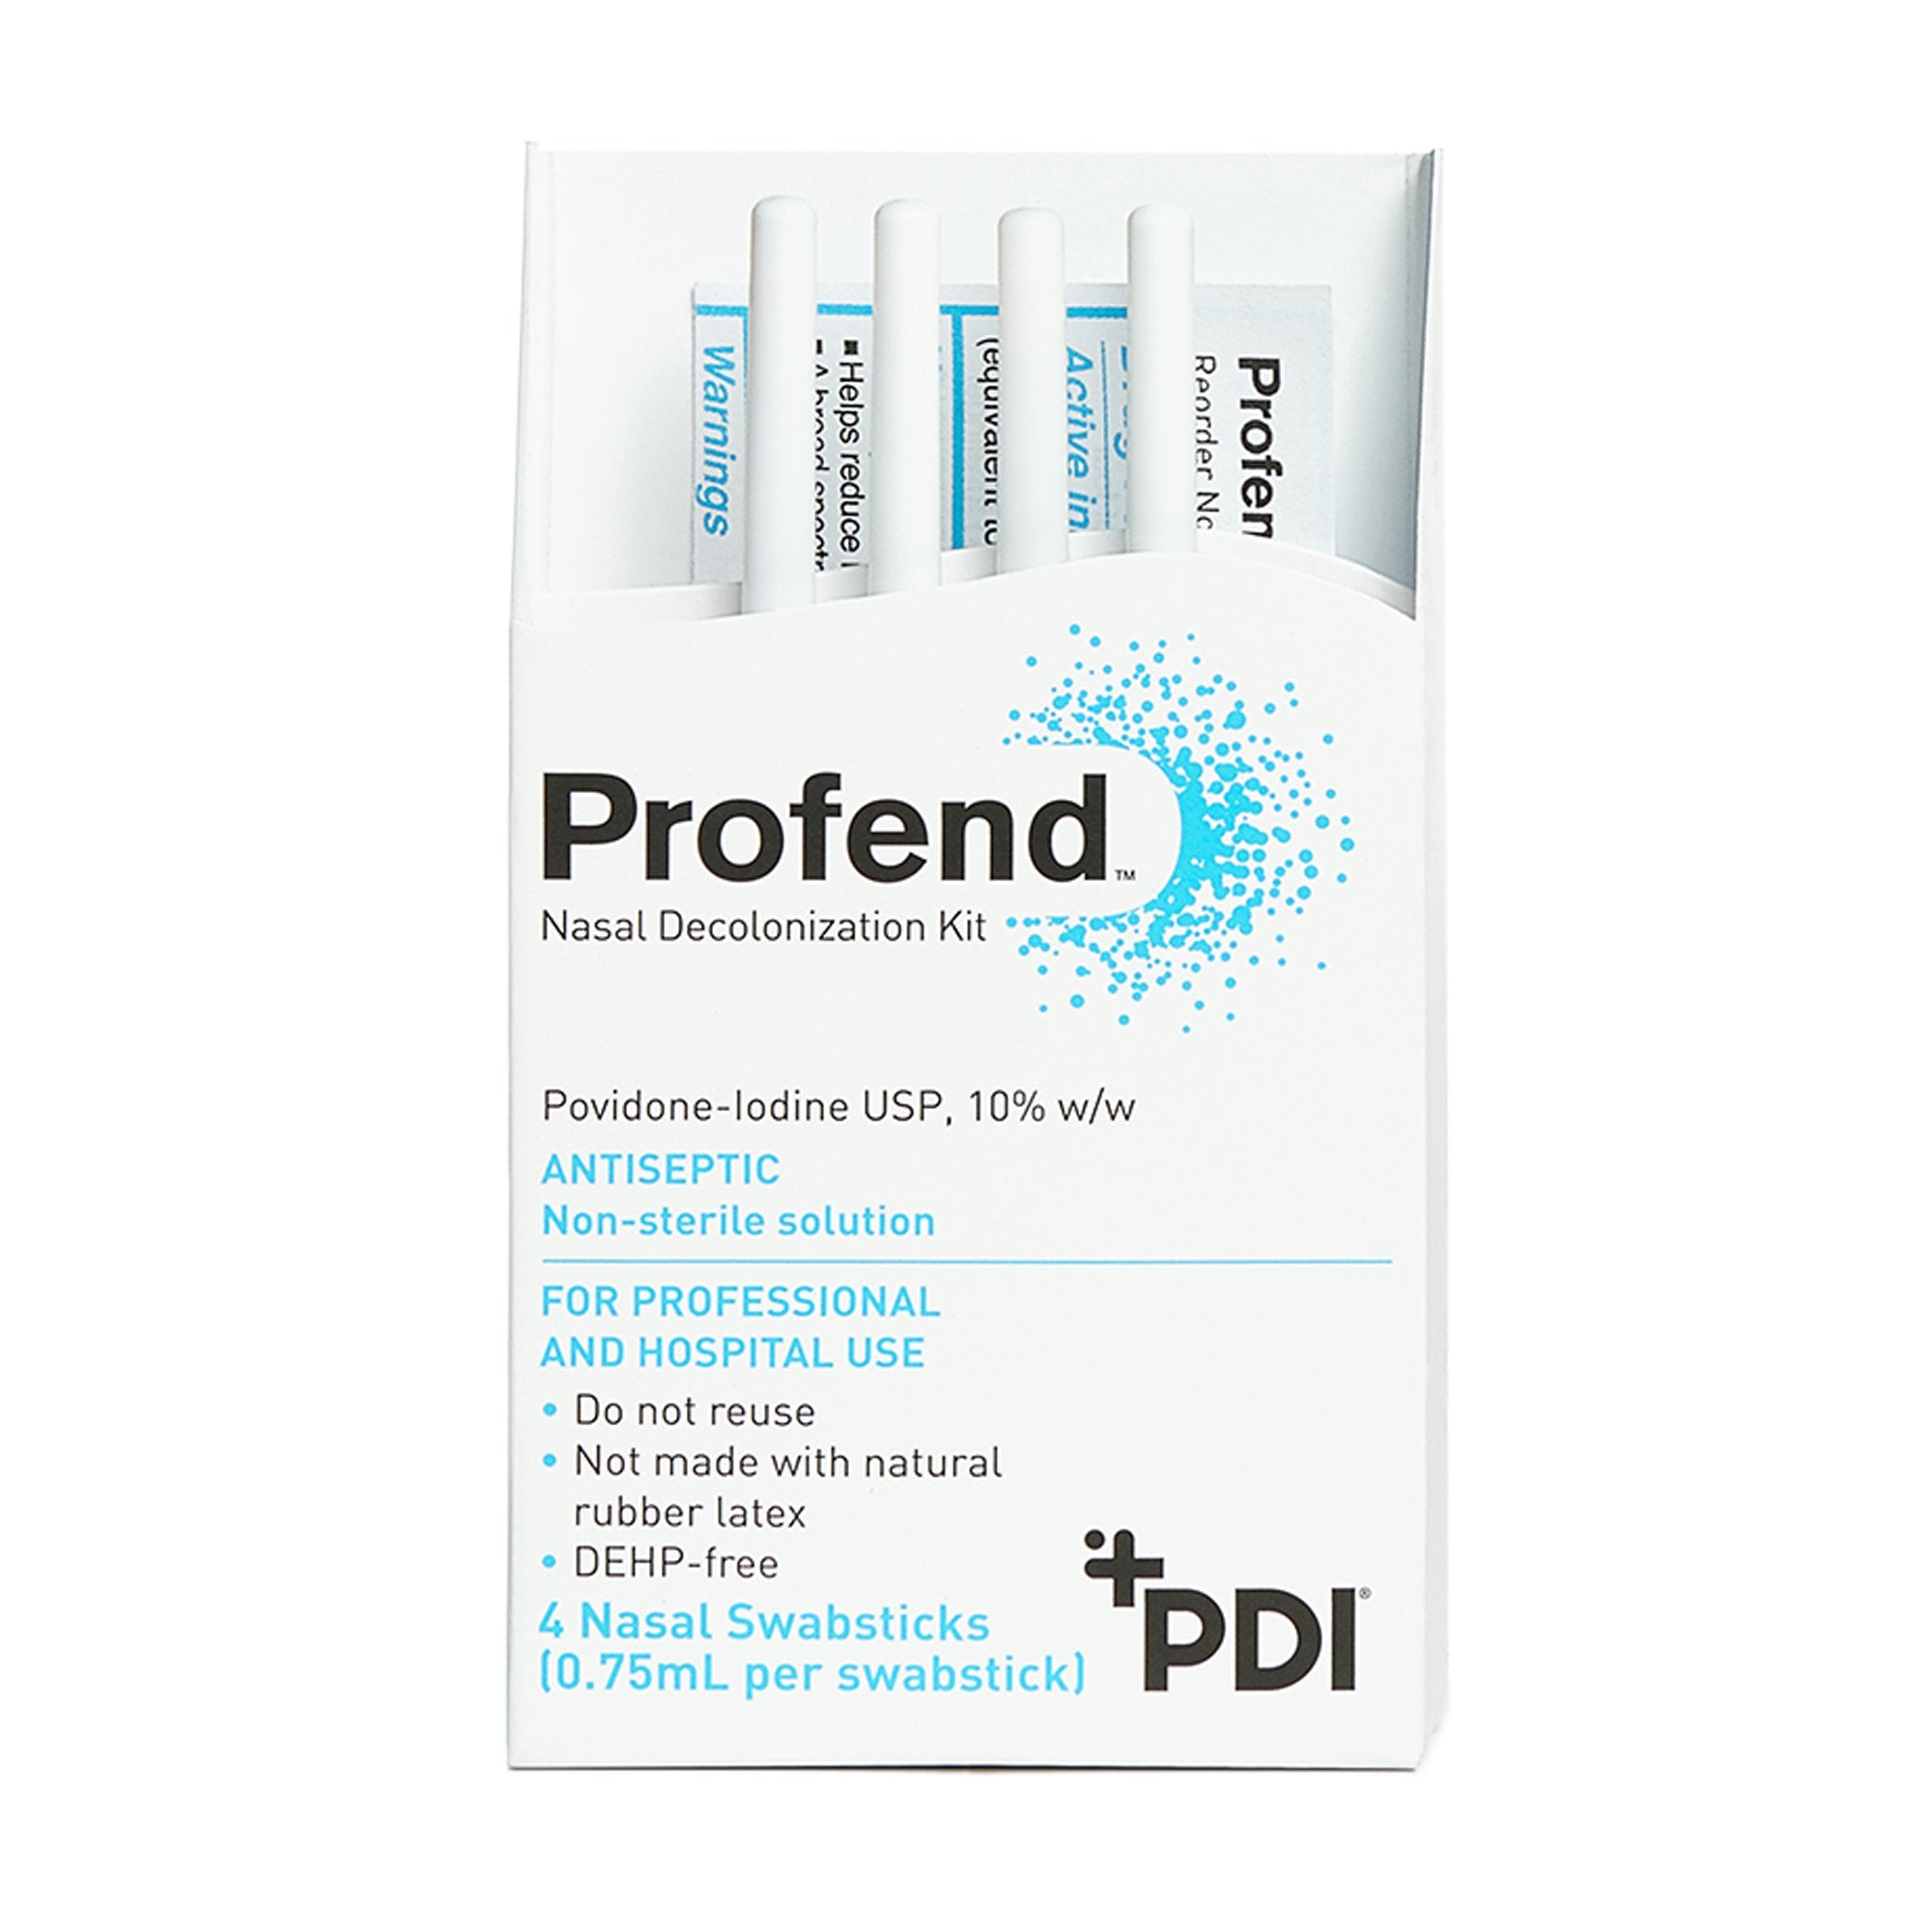 Impregnated Nasal Swabstick Kit Profend Povidone-Iodine NonSterile 4 per Pack